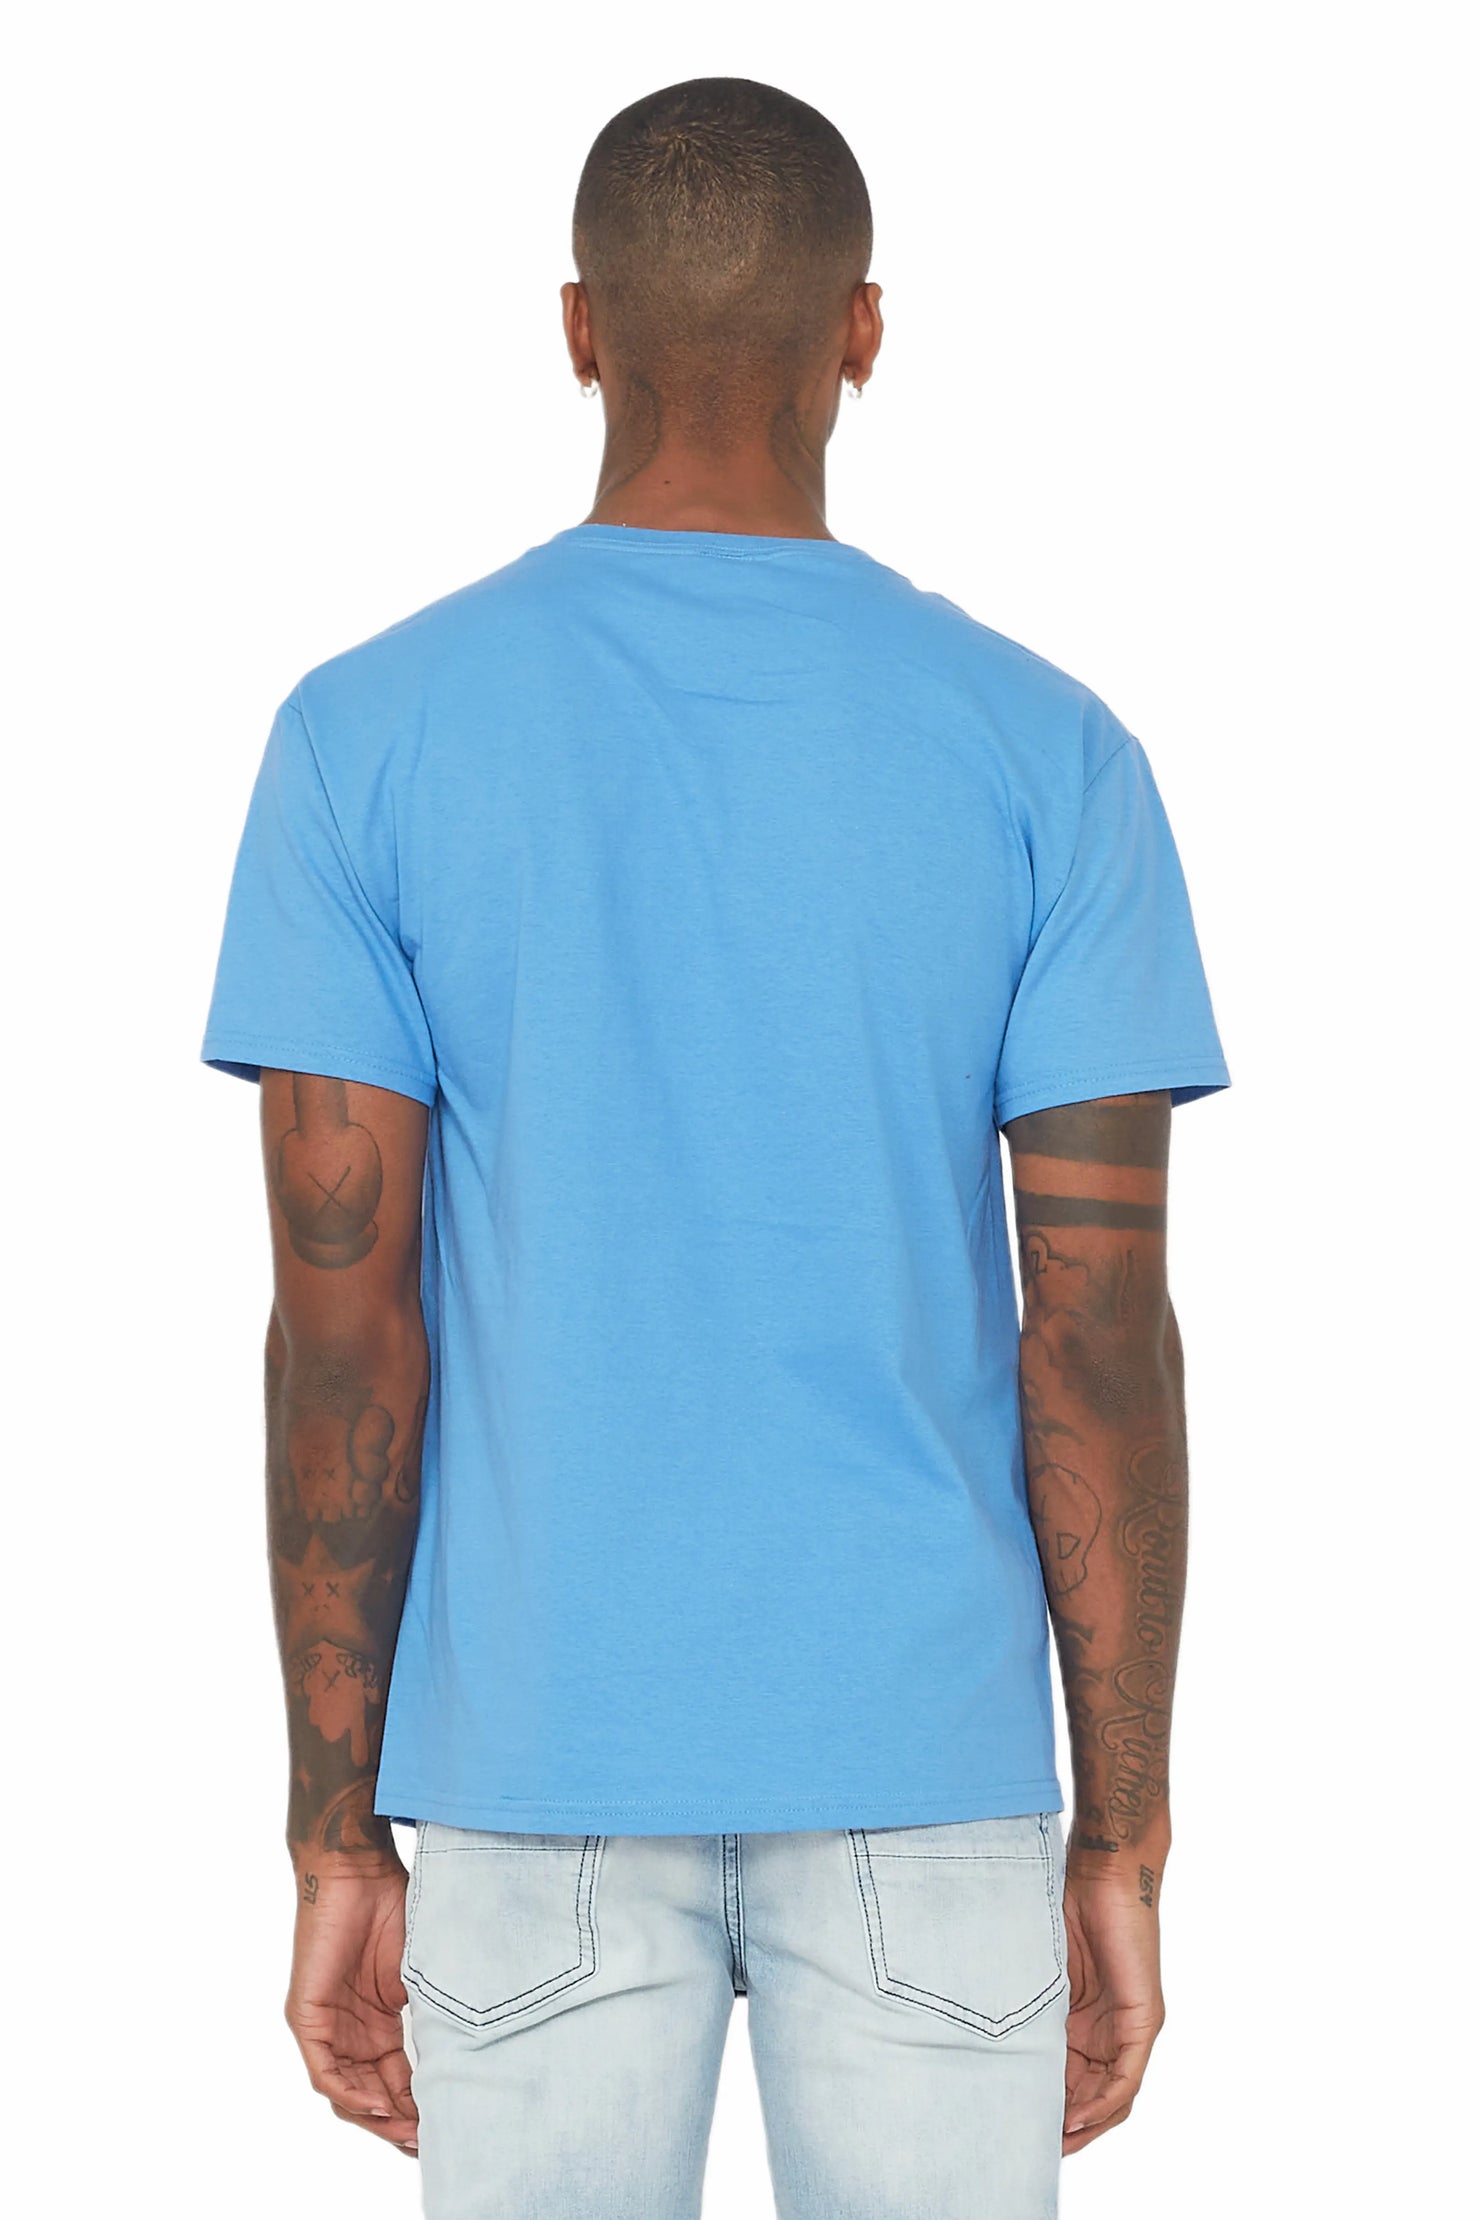 Fraust Blue Graphic T-Shirt